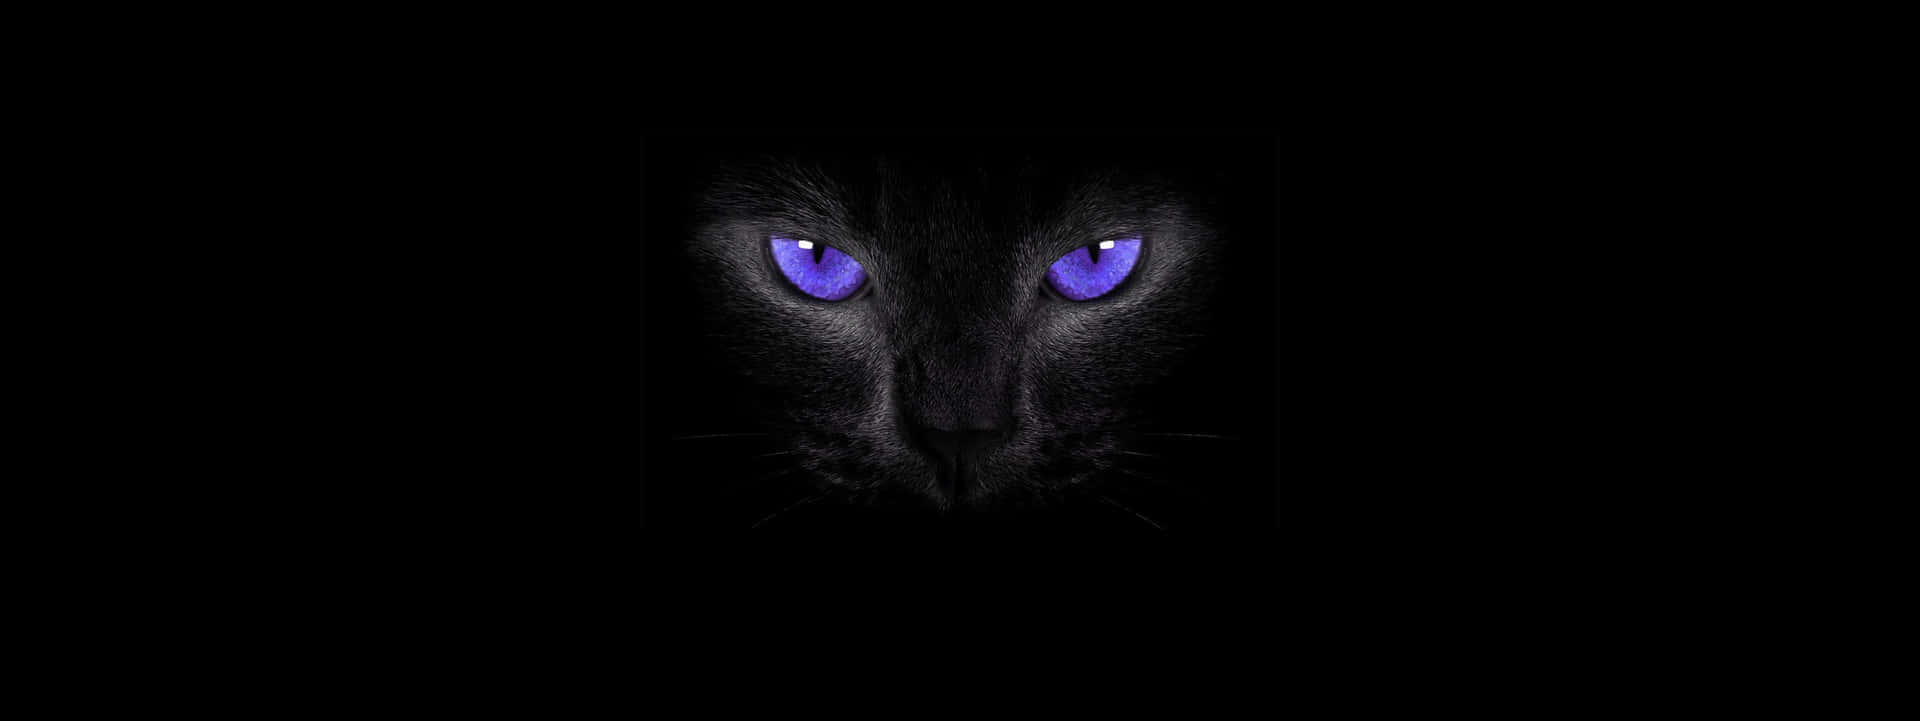 Purple Cat Eyes Black Cat Background